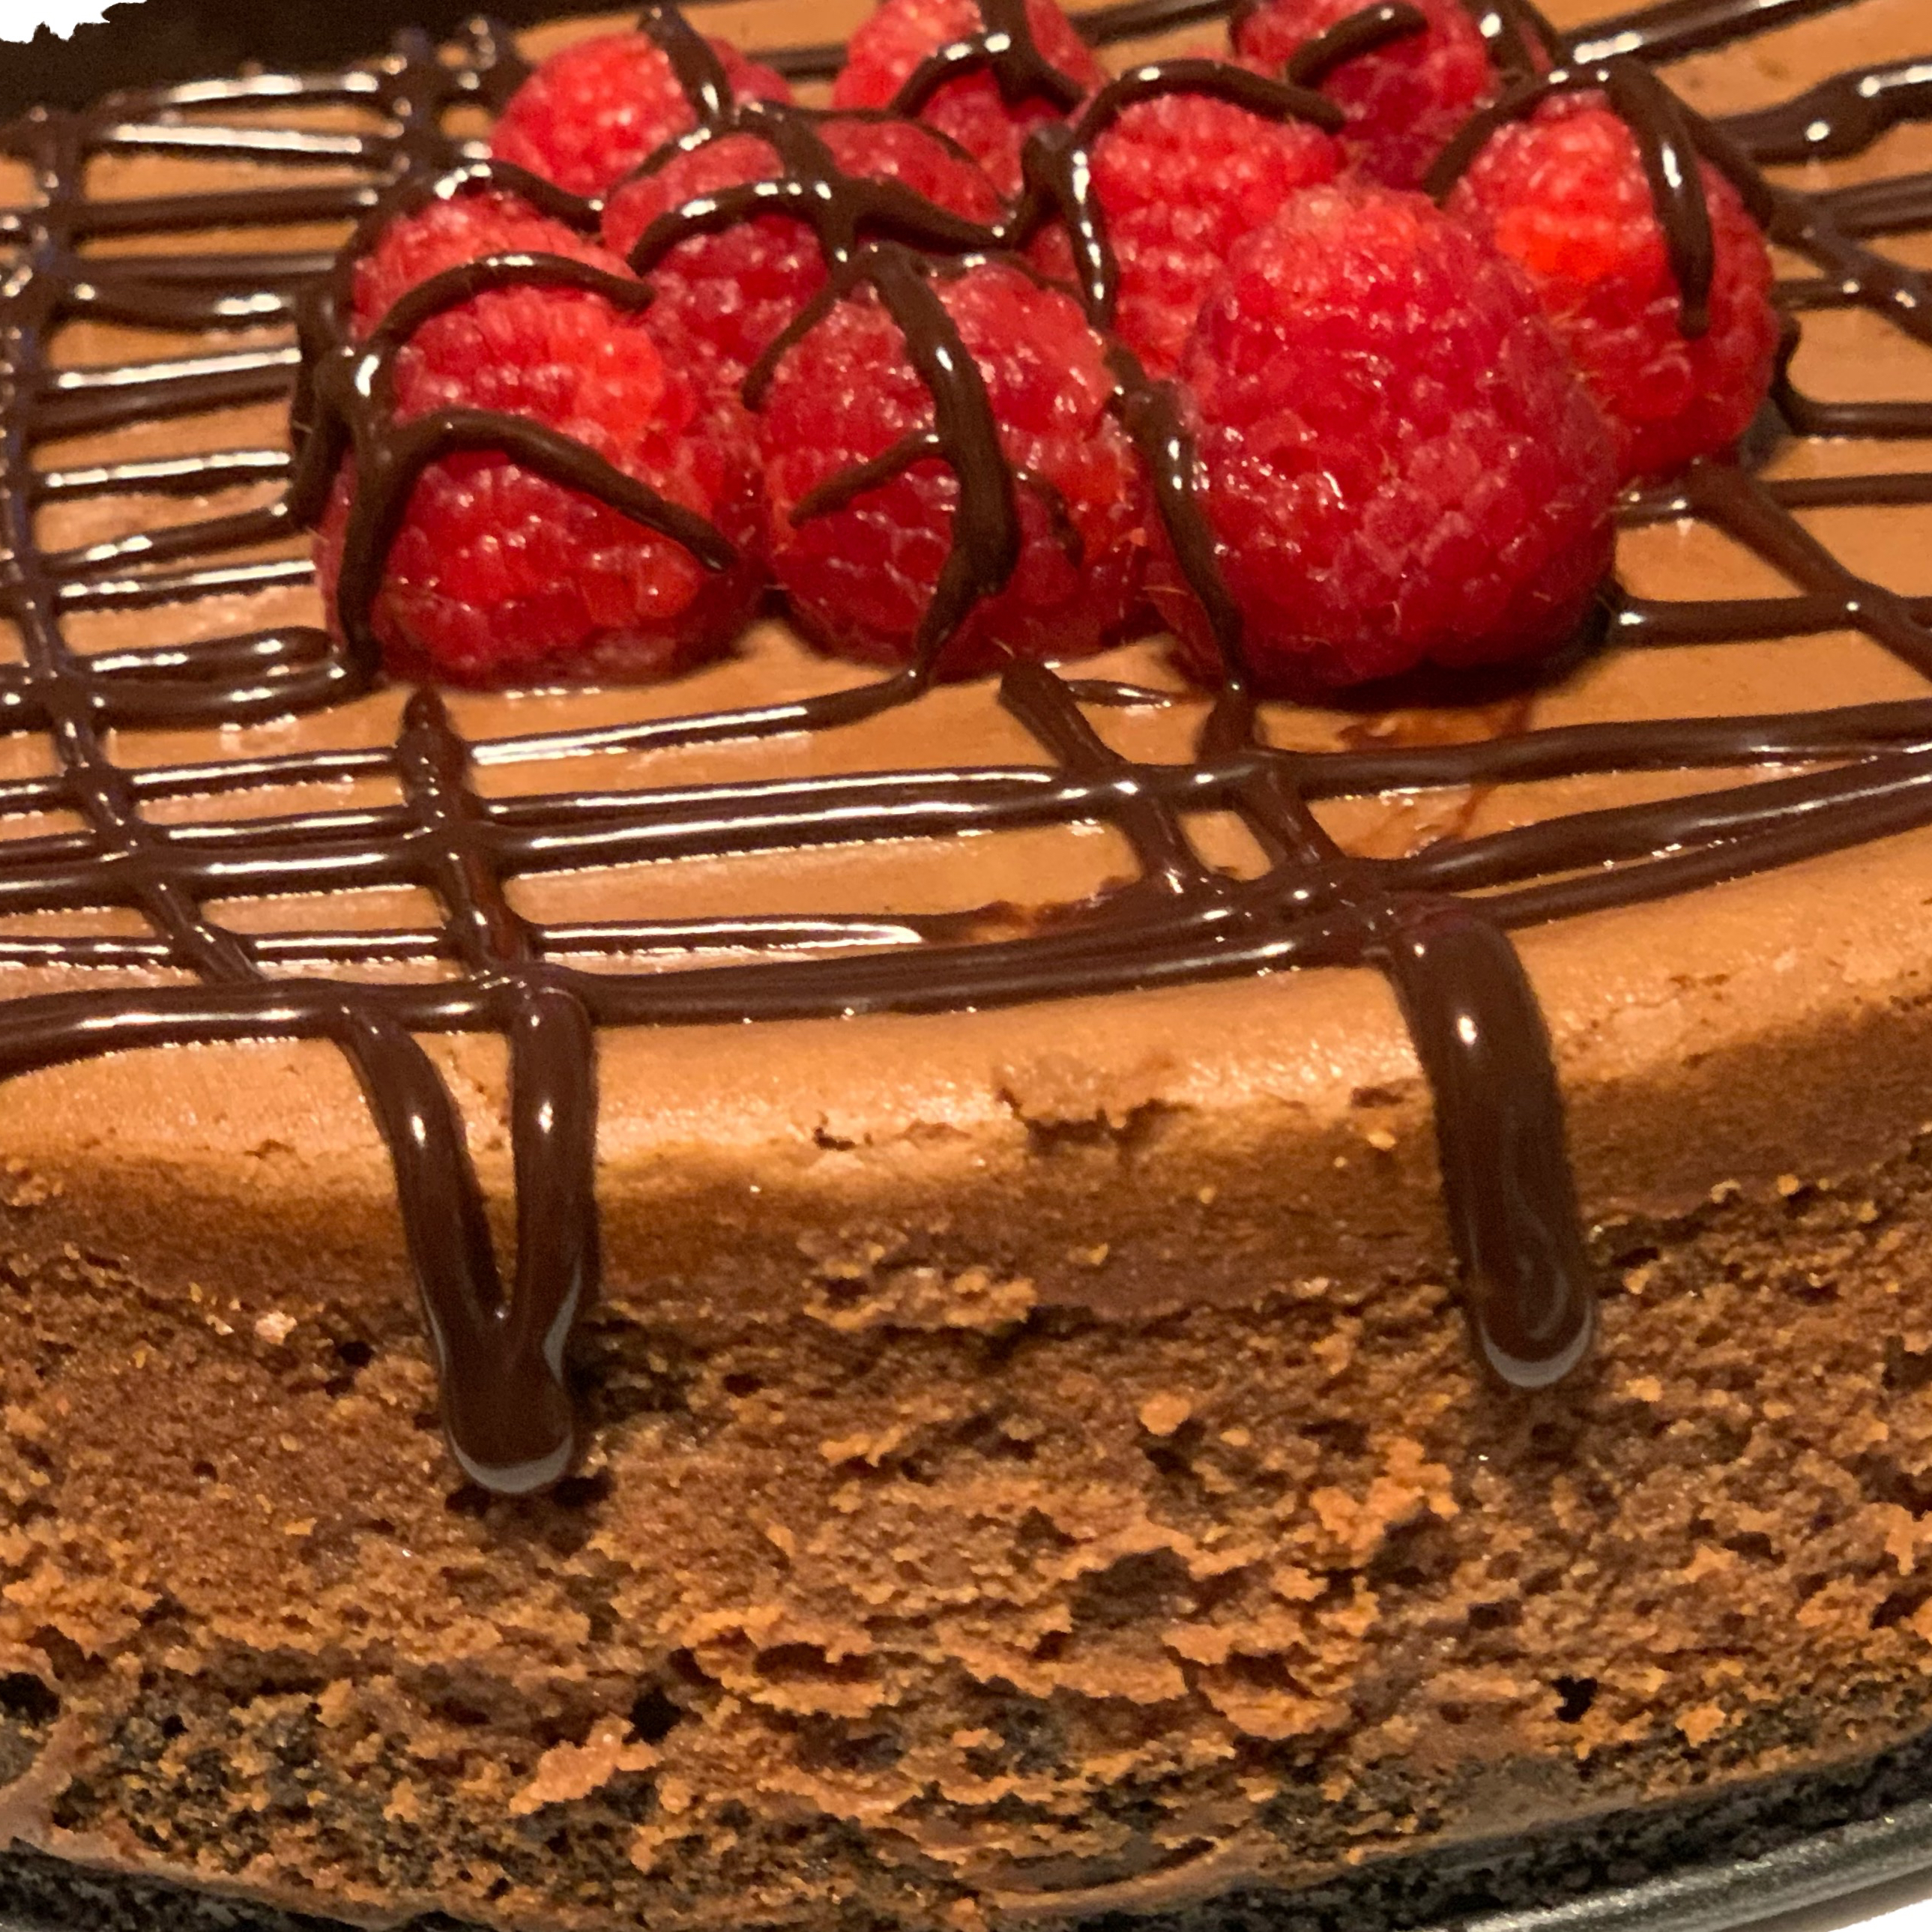 PHILADELPHIA Double-Chocolate Cheesecake 